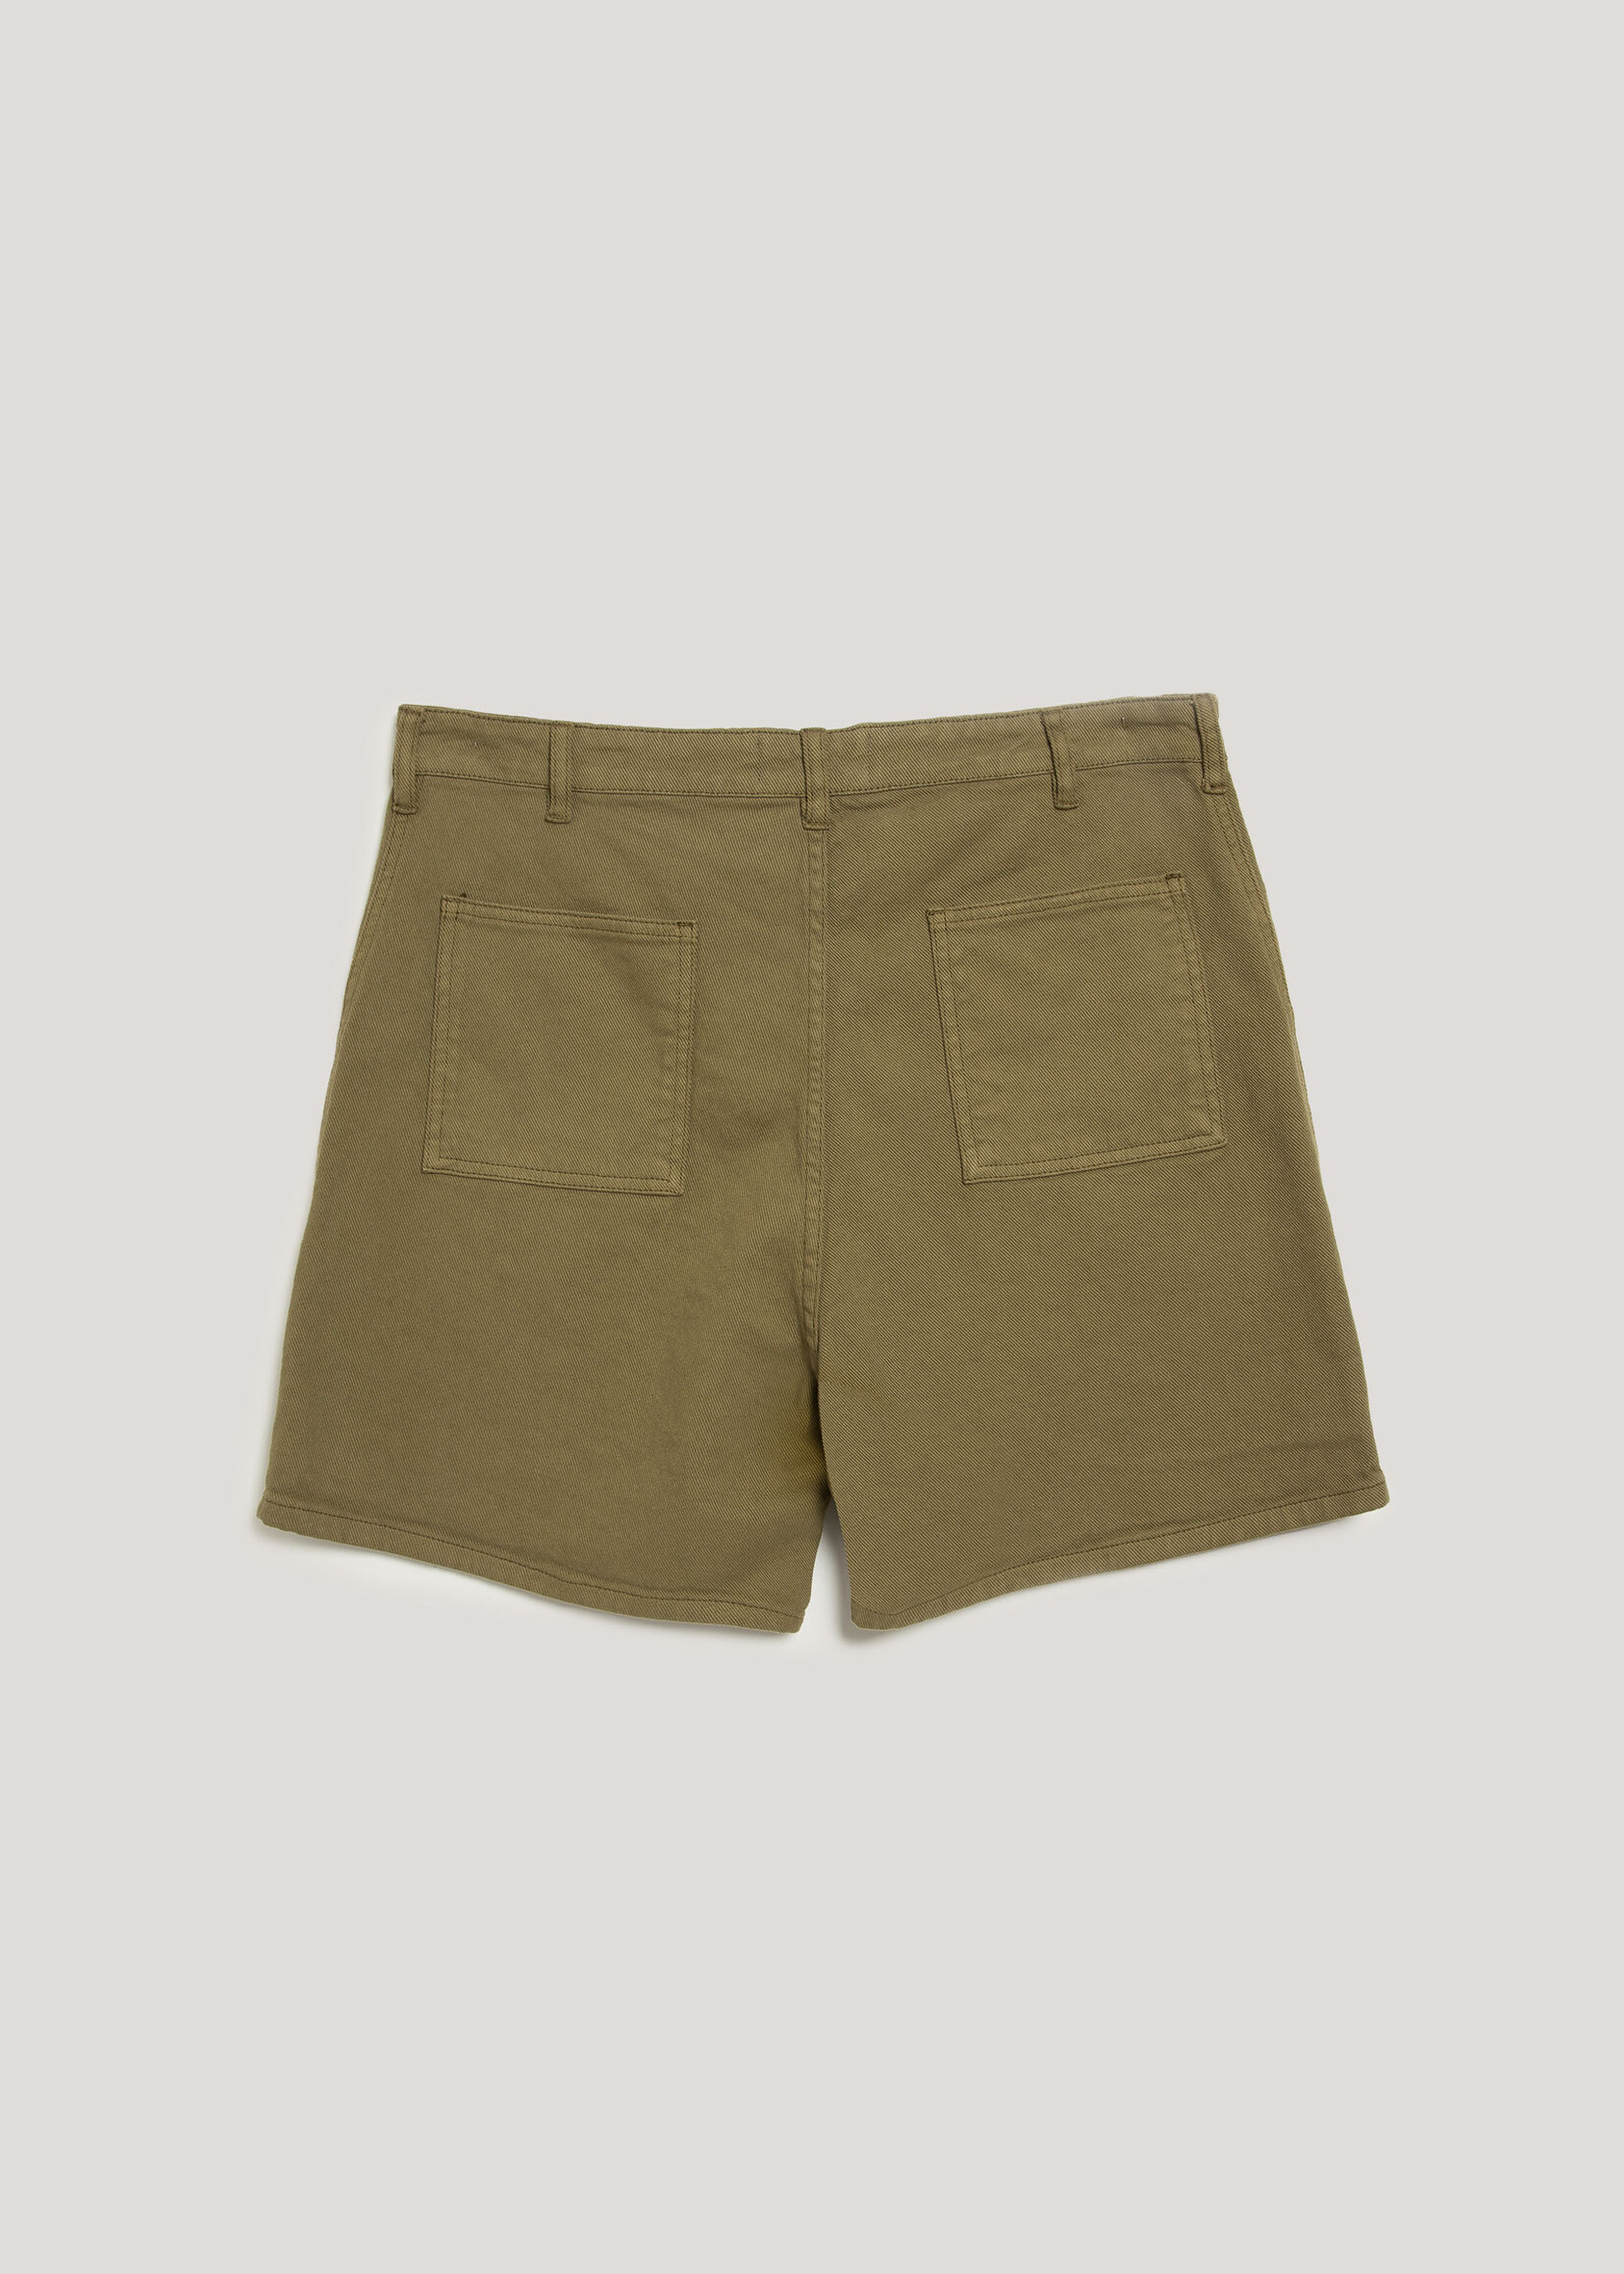 YMC Bush Cargo Shorts in Olive